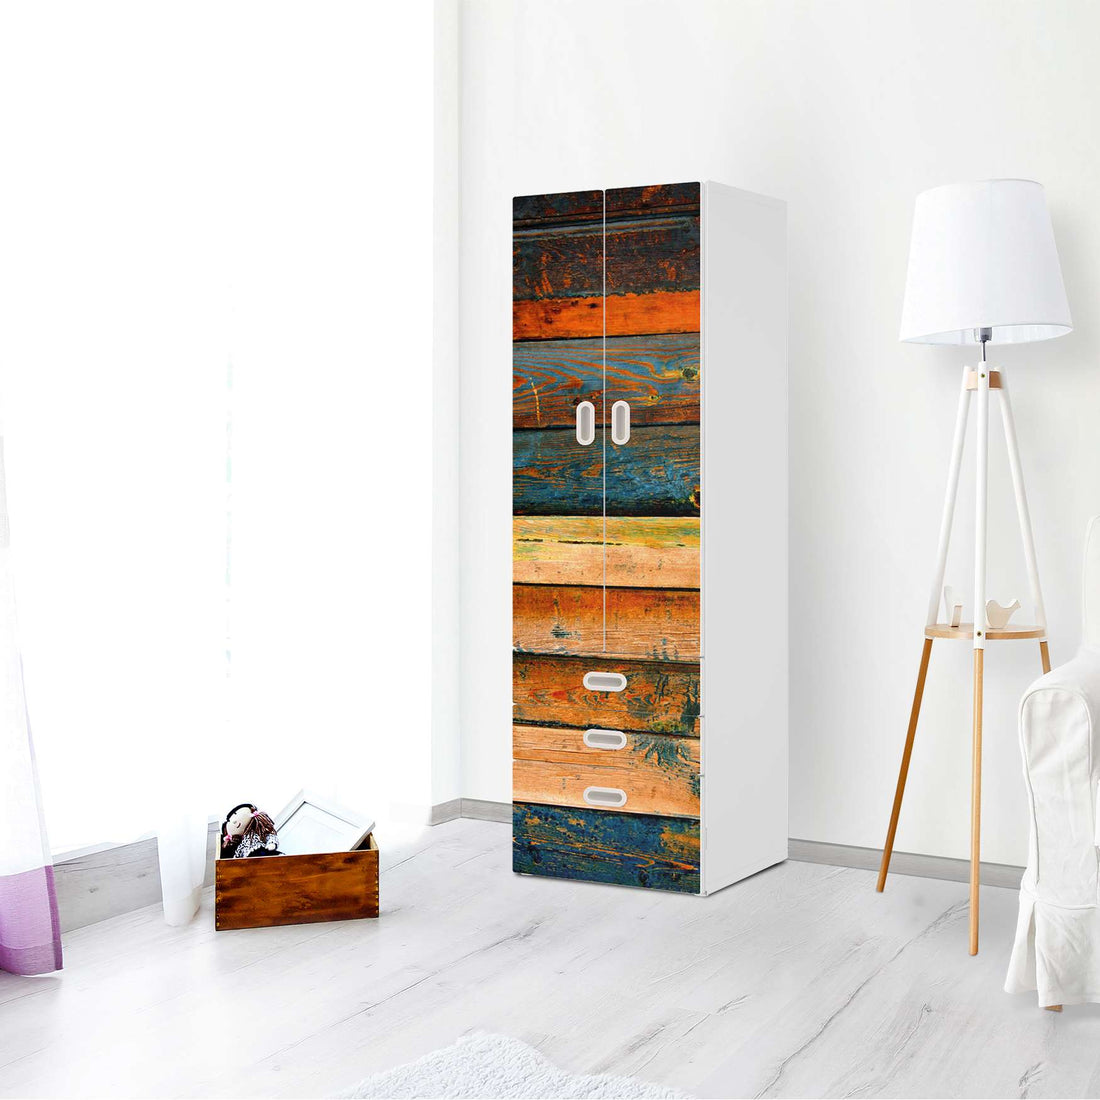 Klebefolie Wooden - IKEA Stuva / Fritids kombiniert - 3 Schubladen und 2 große Türen - Kinderzimmer